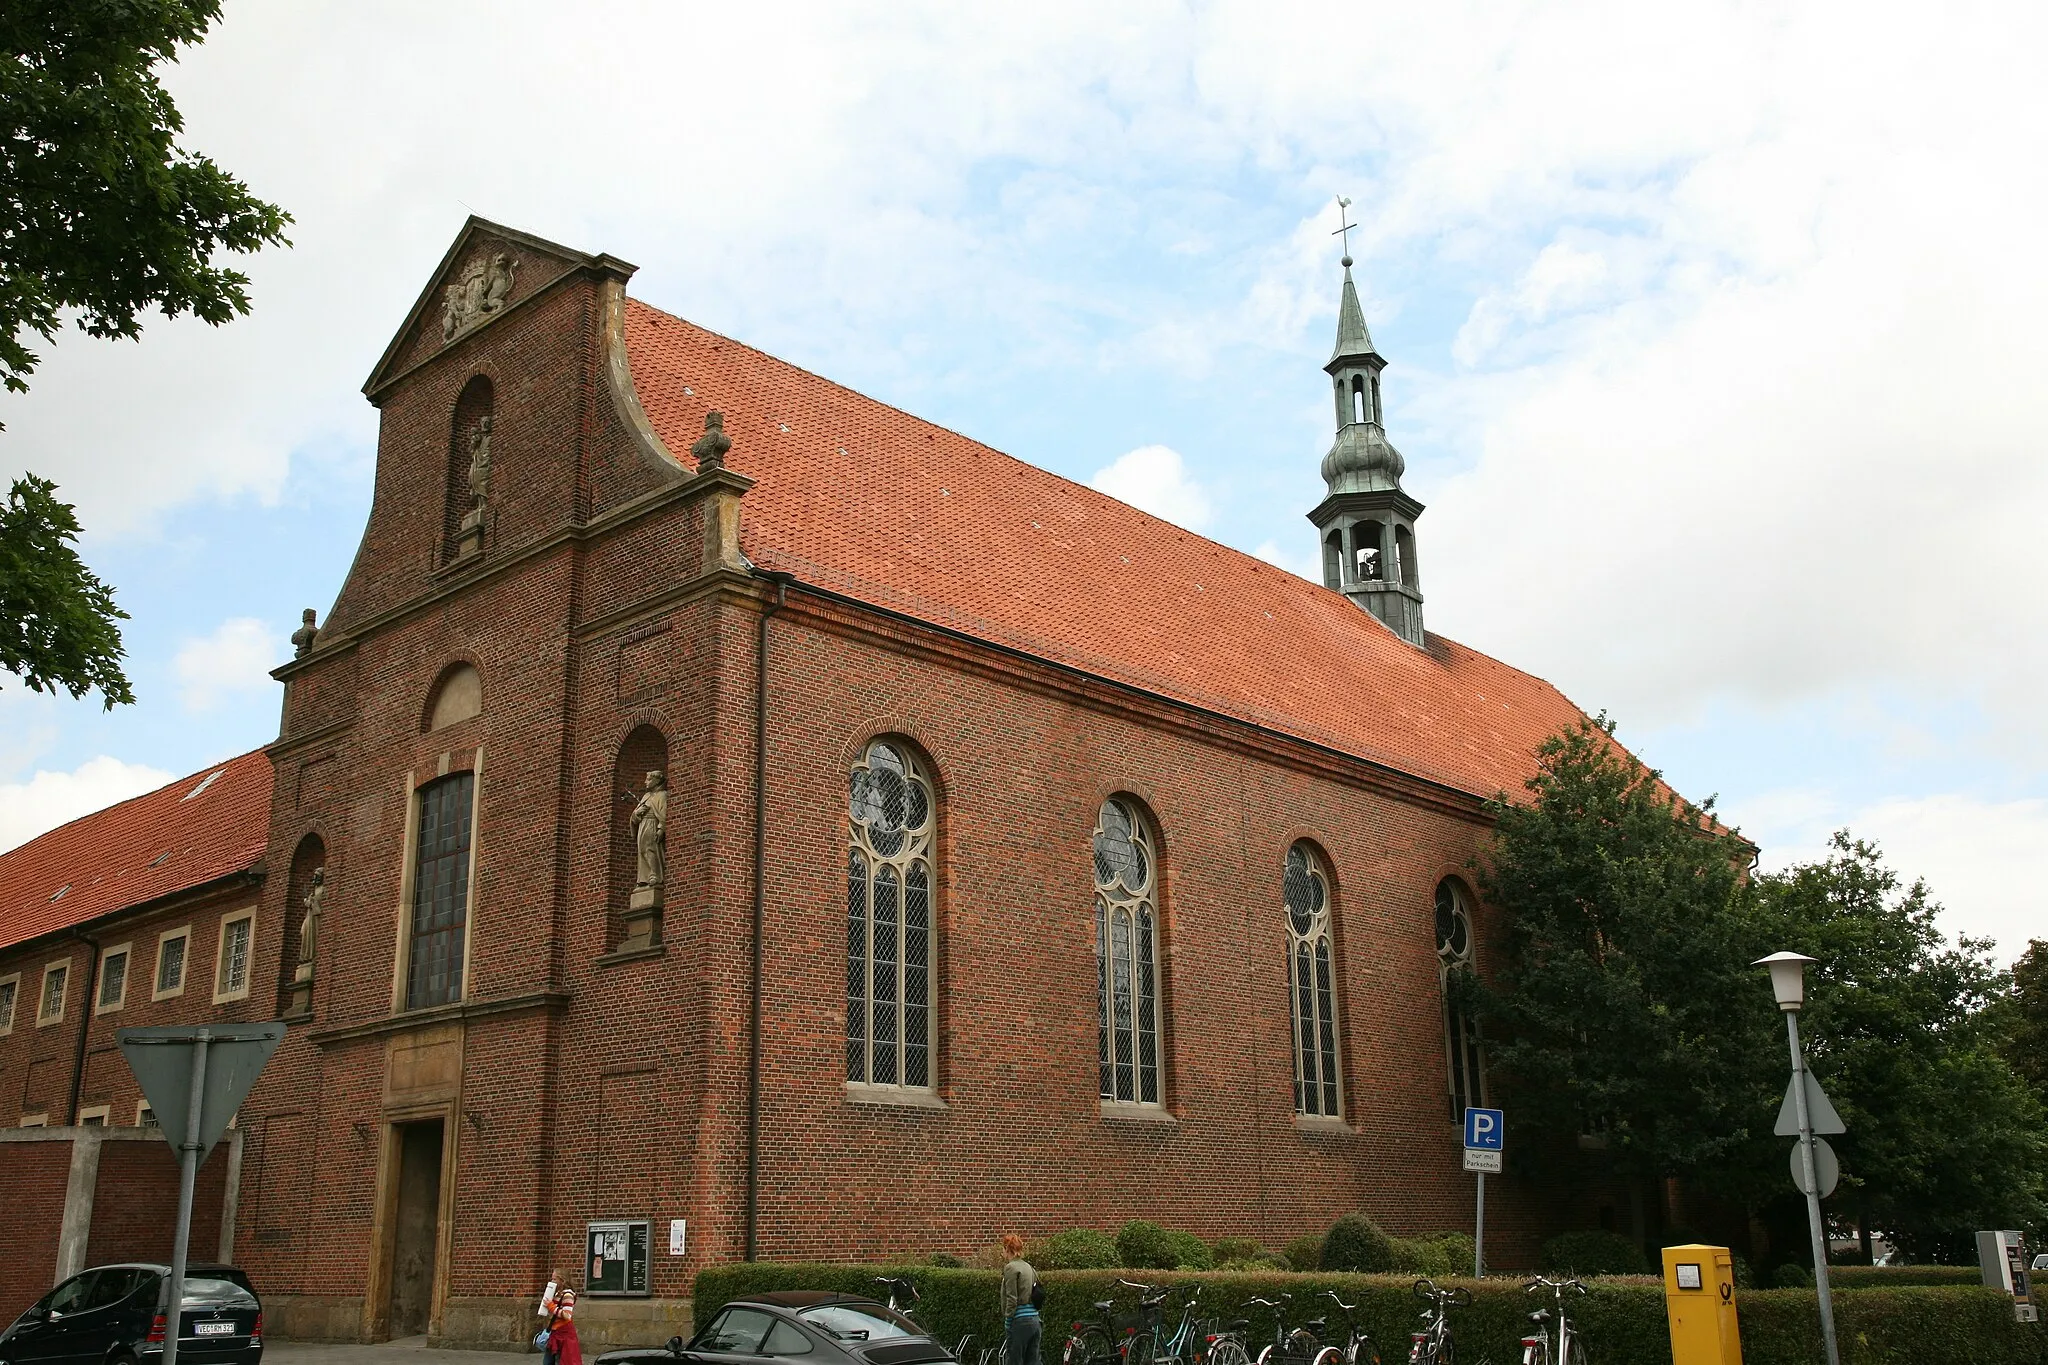 Photo showing: The Klosterkirche is an evangelical church in Vechta, Niedersachsen